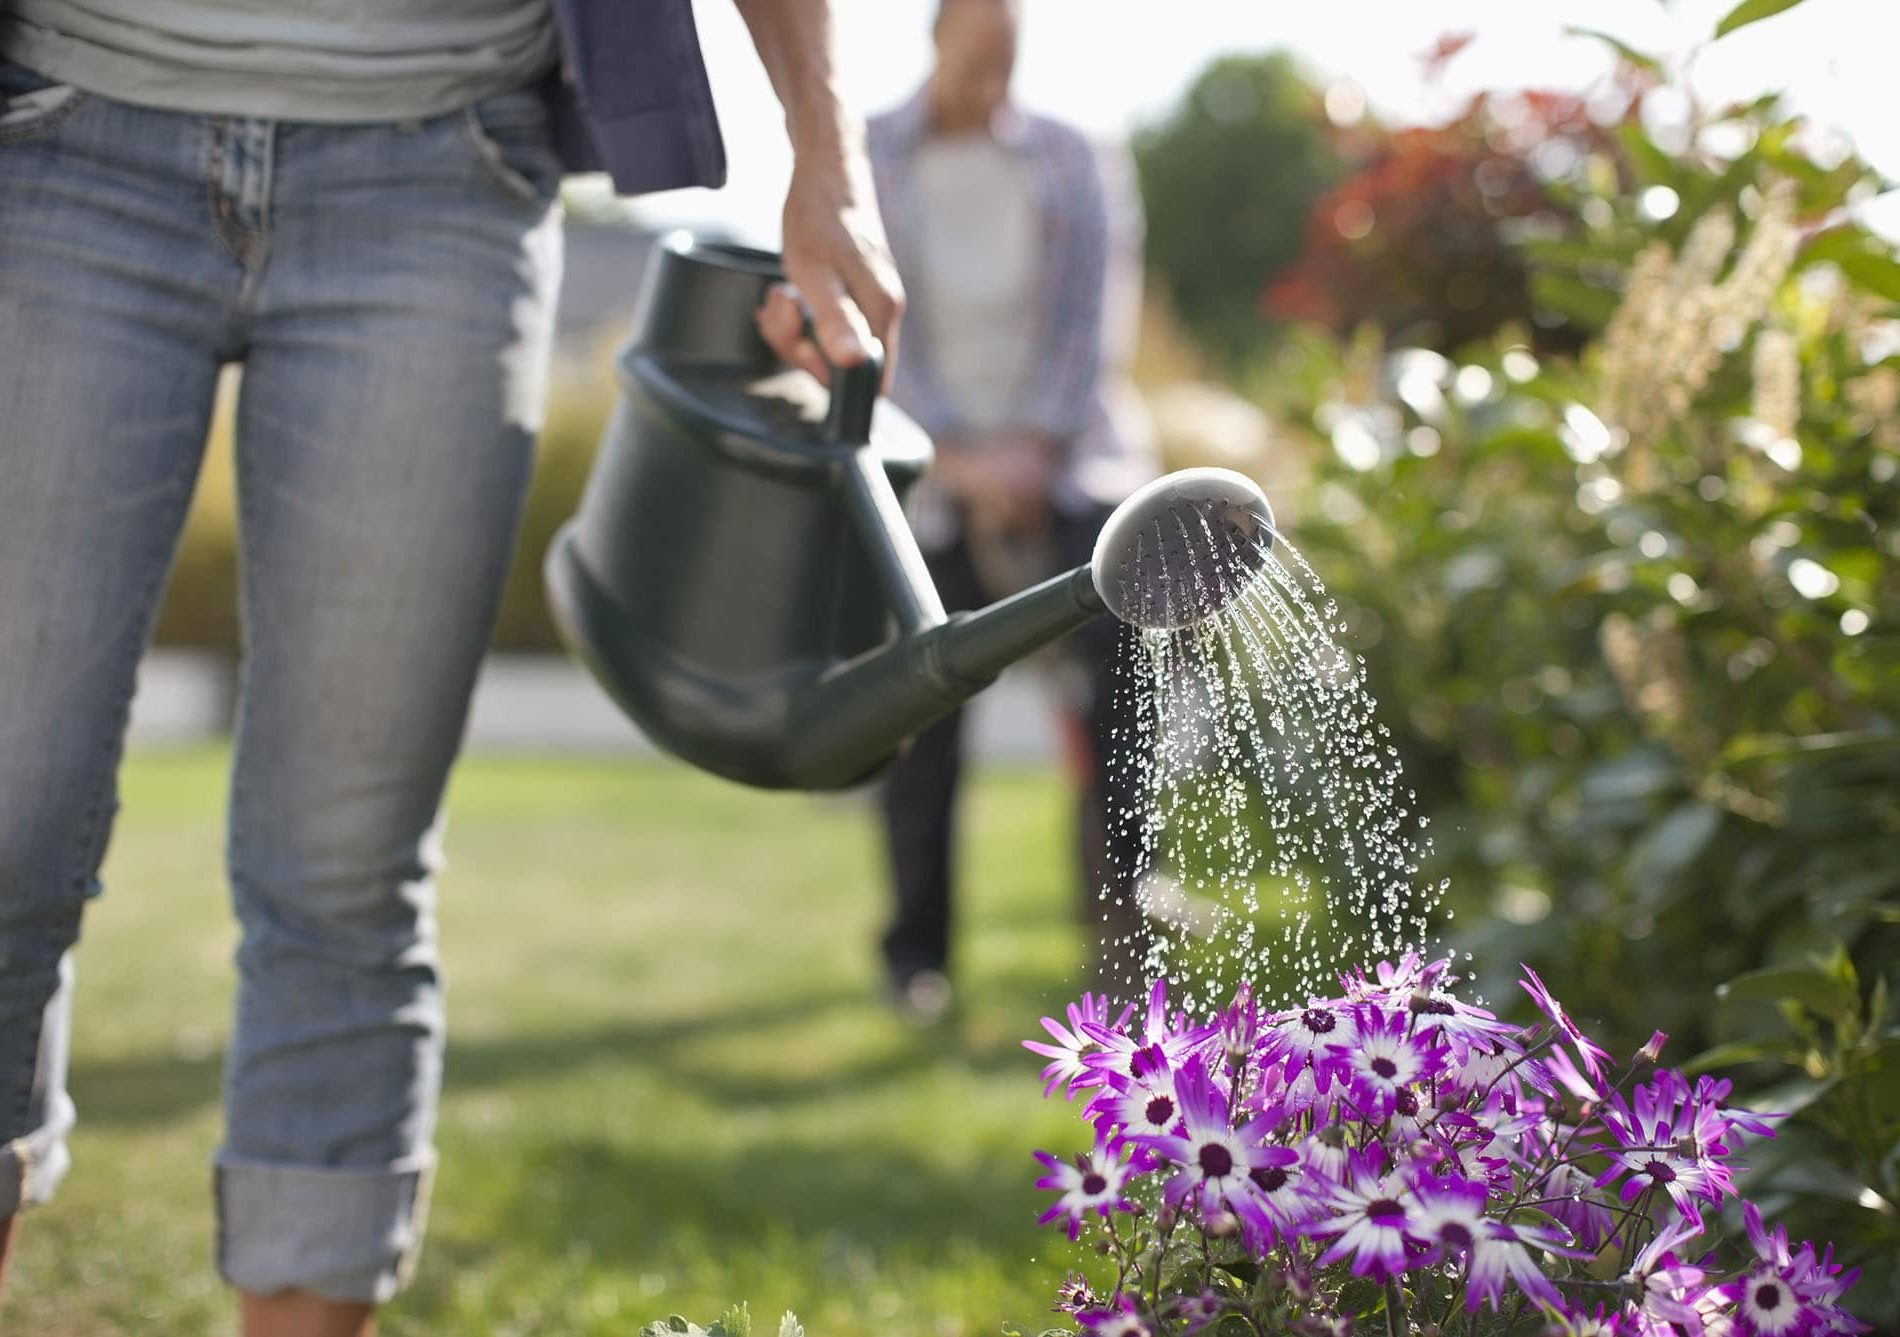 A gardener watering some purple flowers